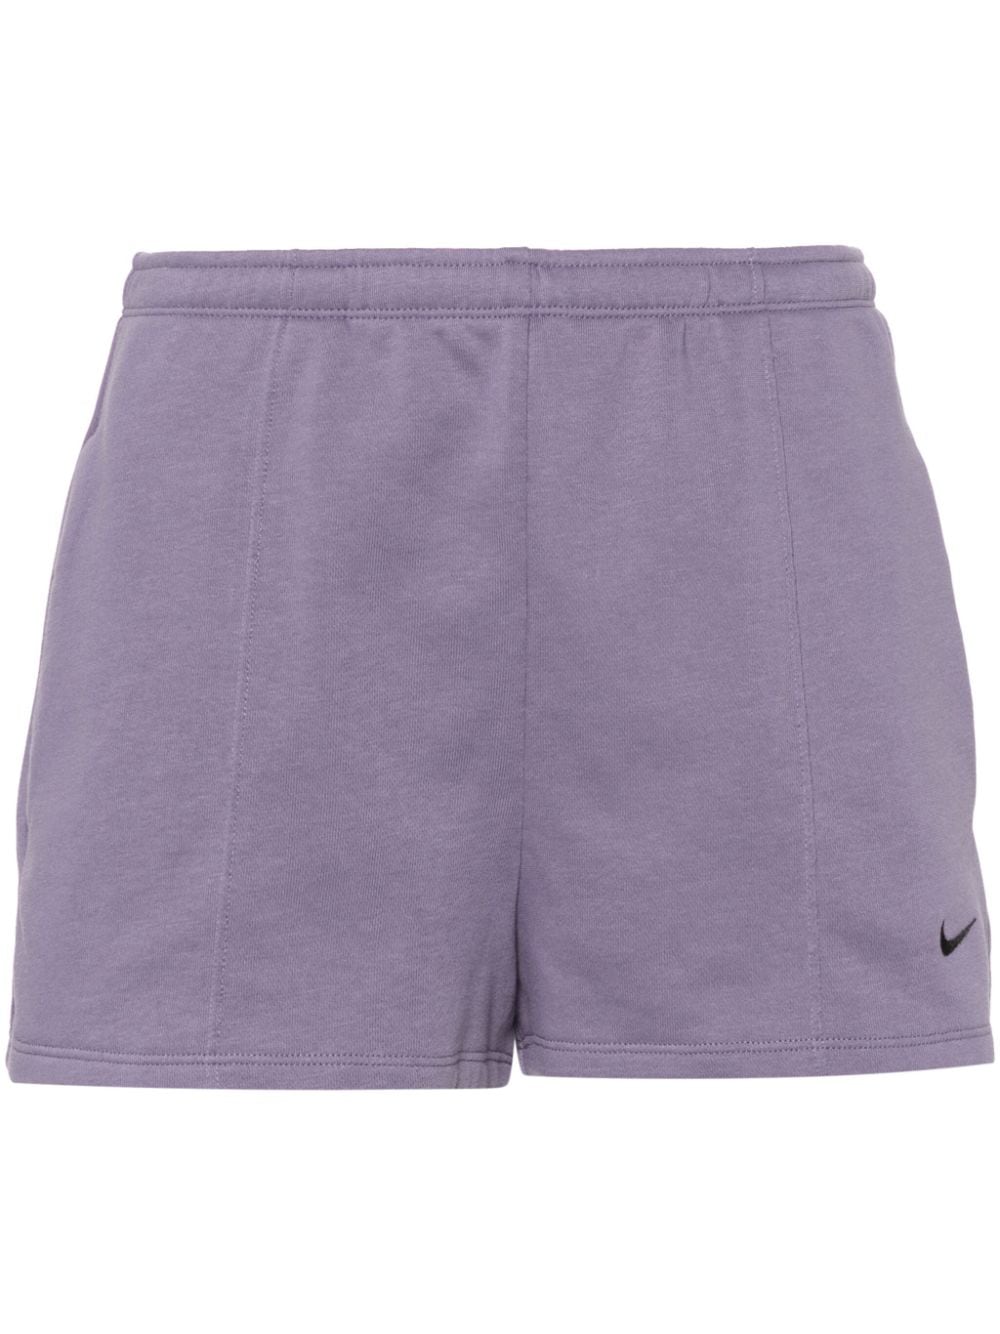 Nike Chill Terry shorts - Violett von Nike